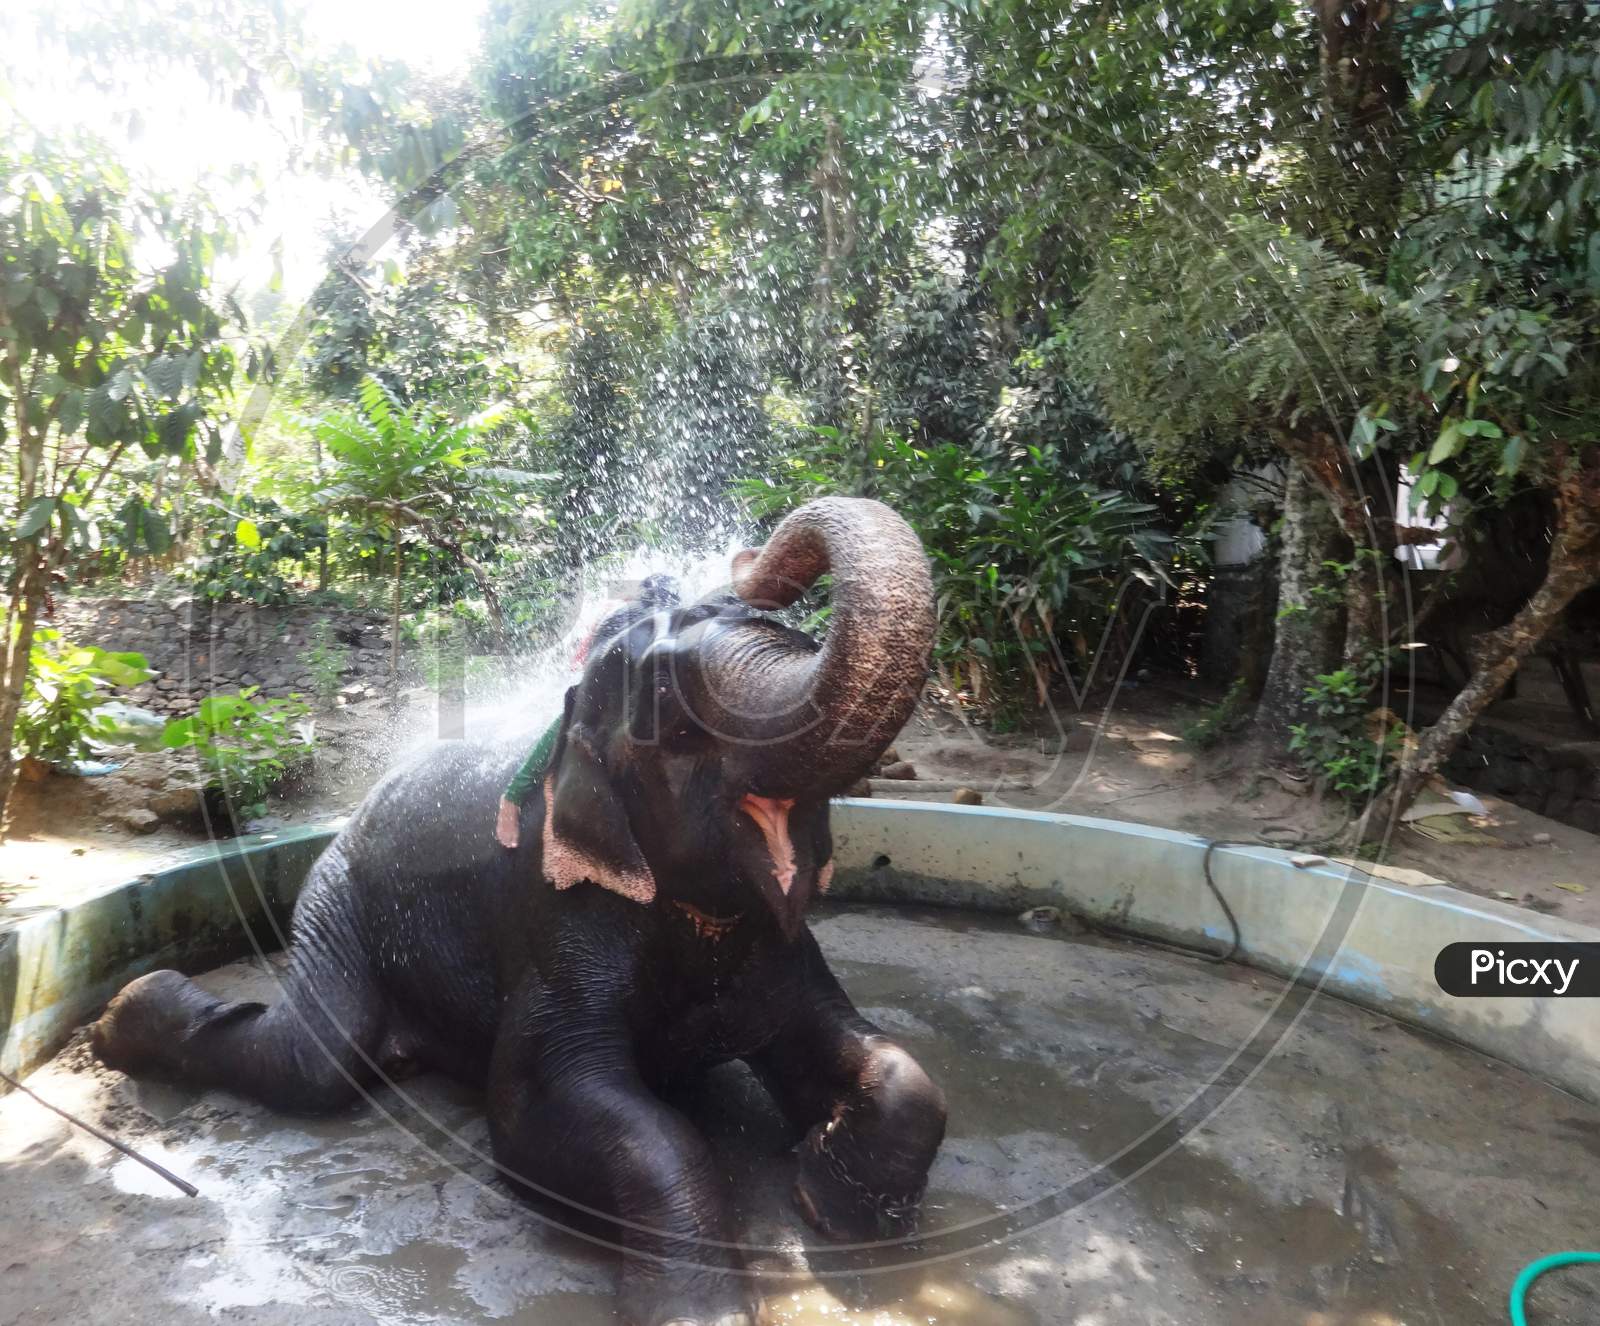 kids enjoying bath with the elephant